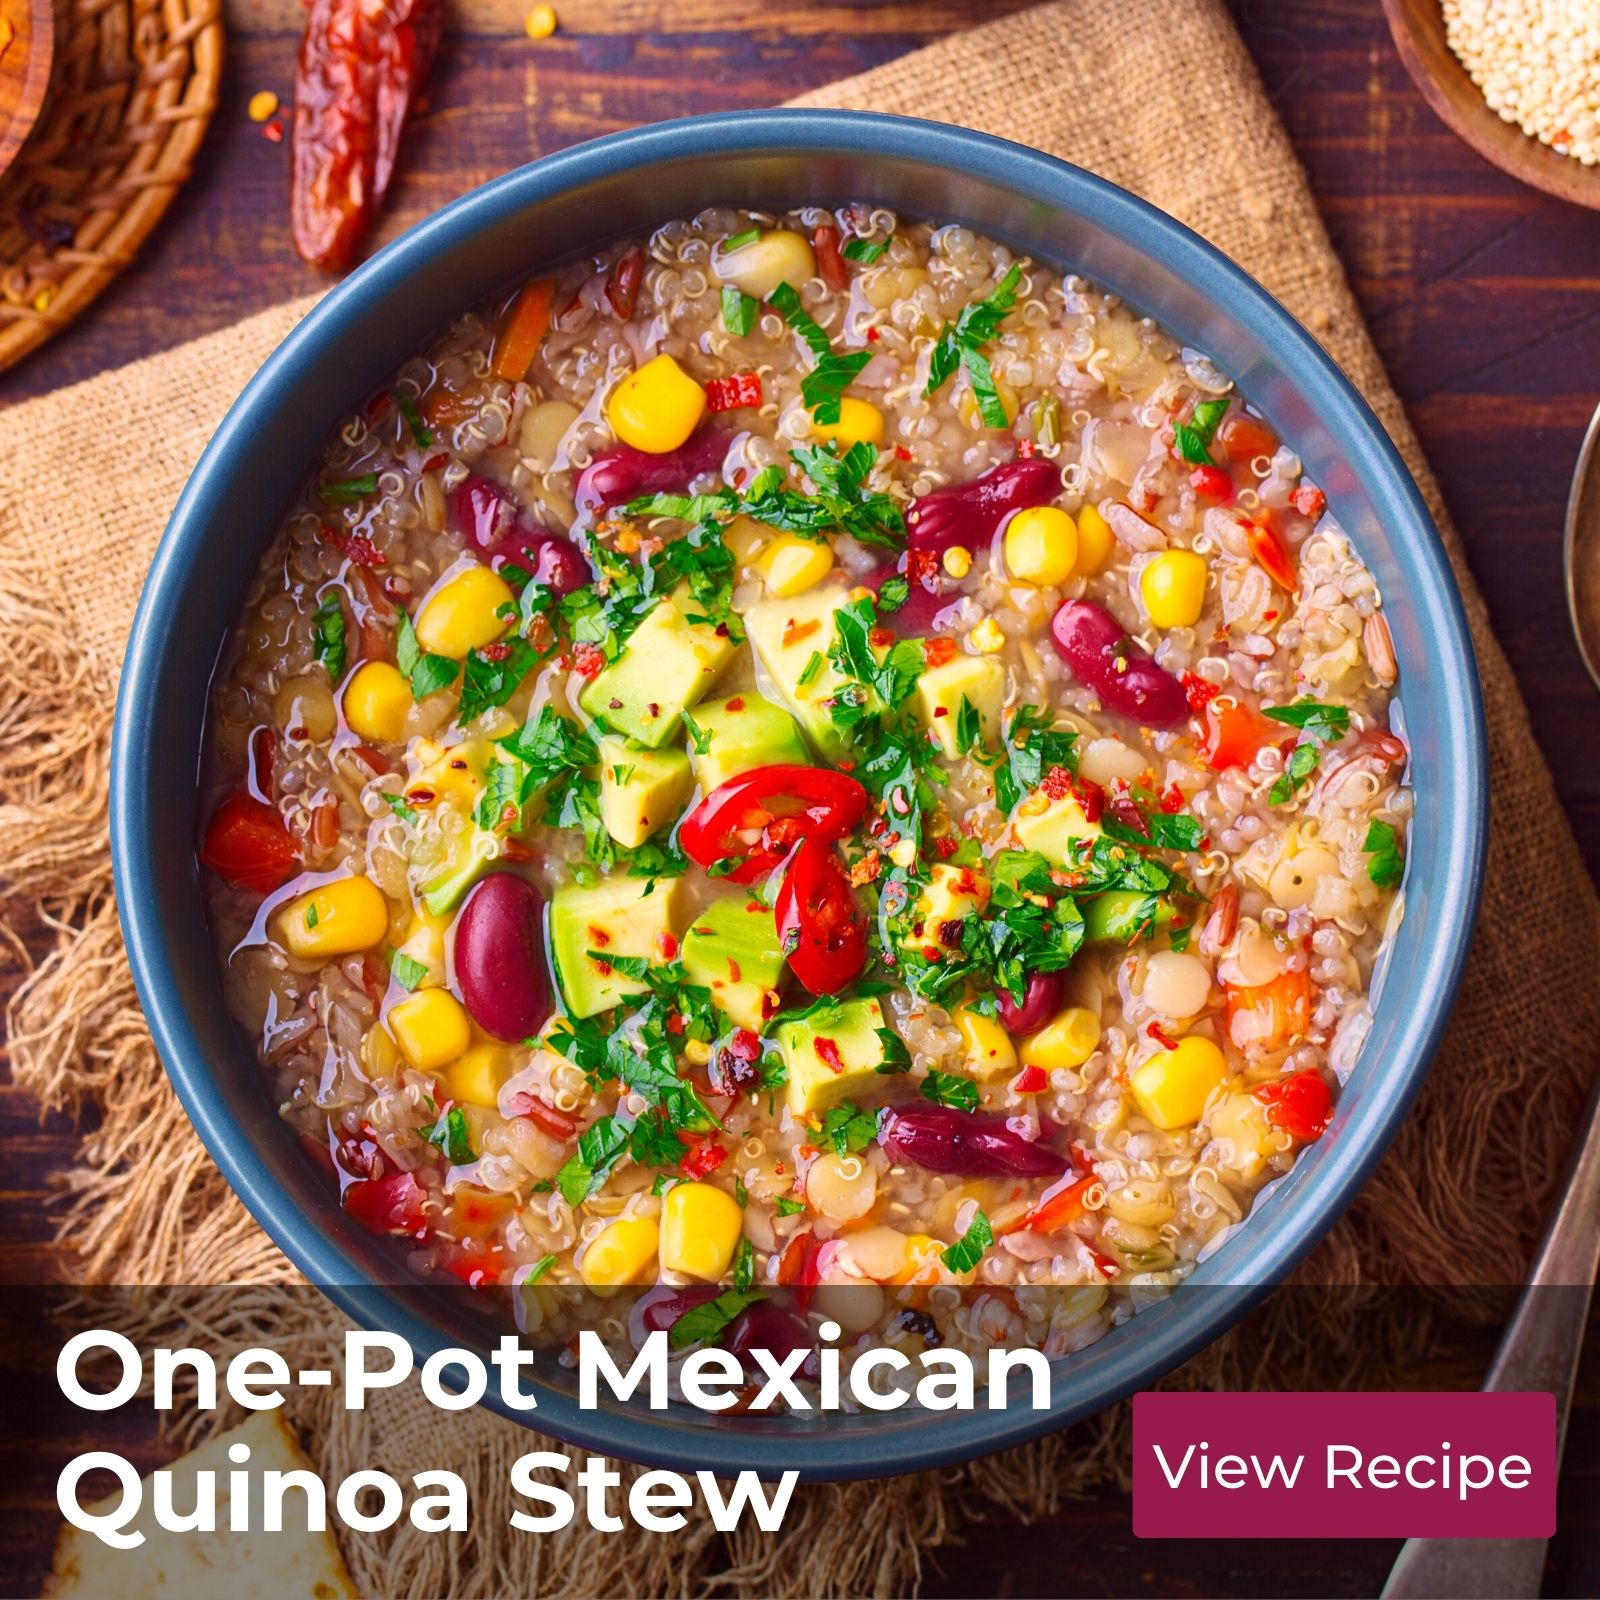 One-Pot Mexican Quinoa Stew